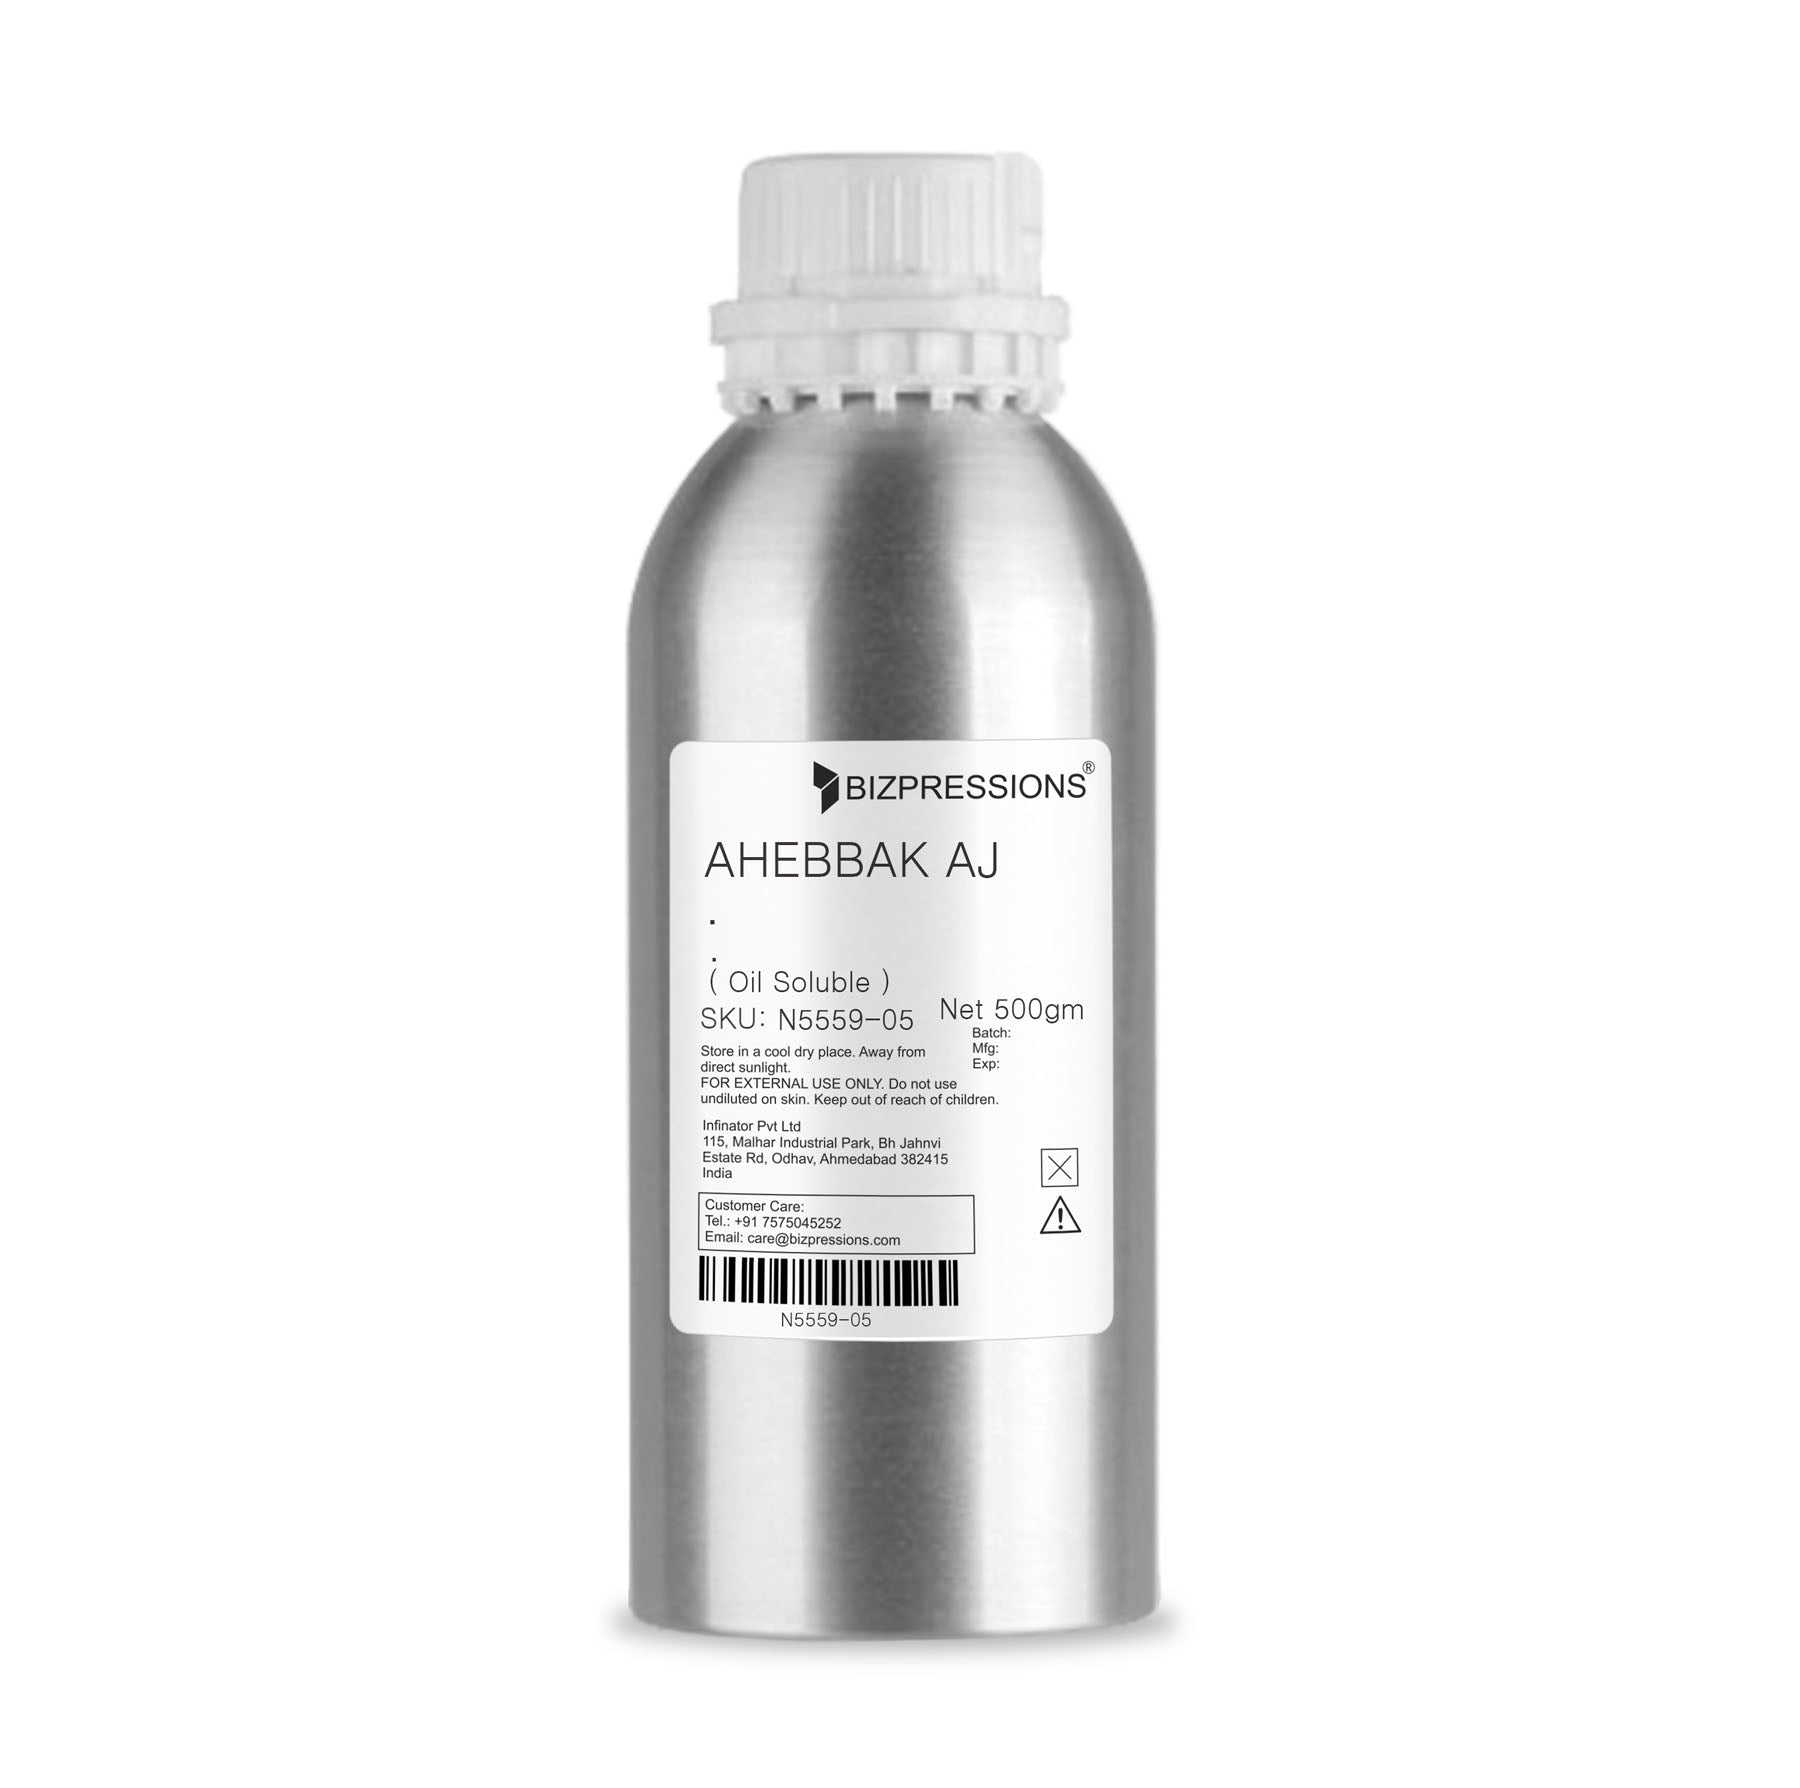 AHEBBAK AJ - Fragrance ( Oil Soluble ) - 500 gm